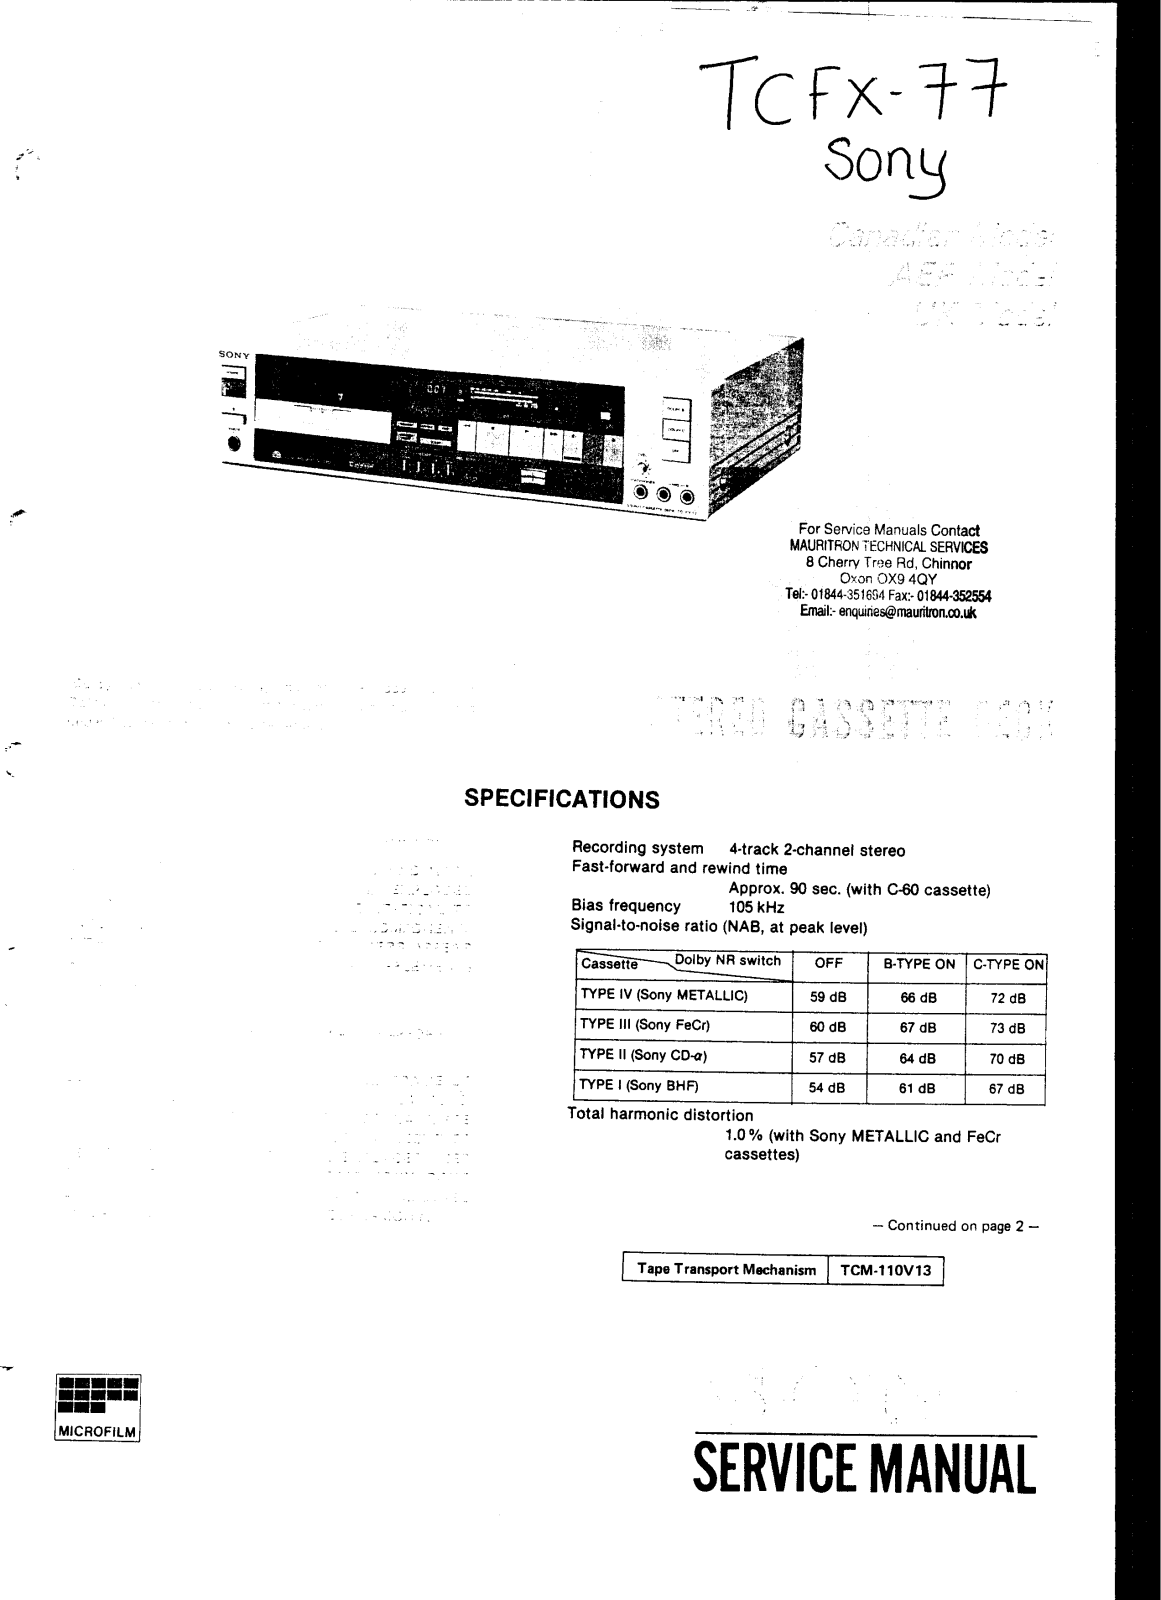 Sony TCFX-77 Service manual